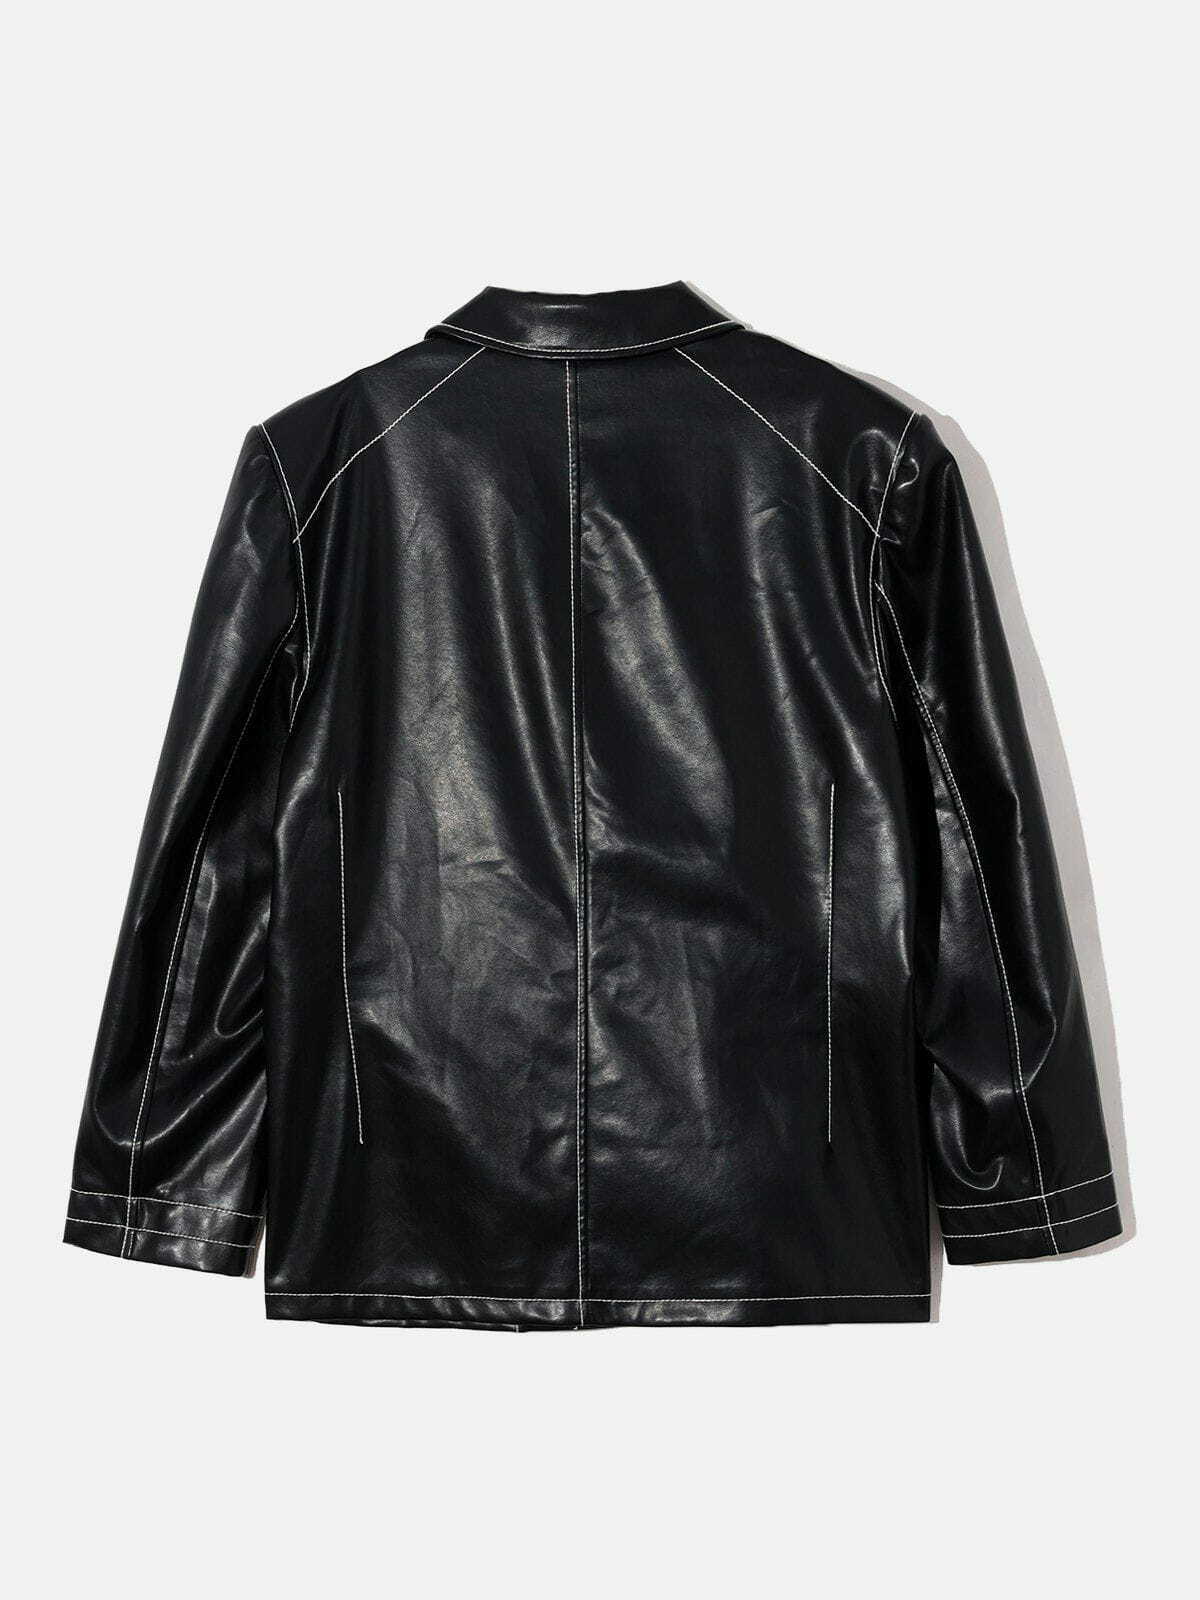 classic black skull jacket [edgy] streetwear essential 3879